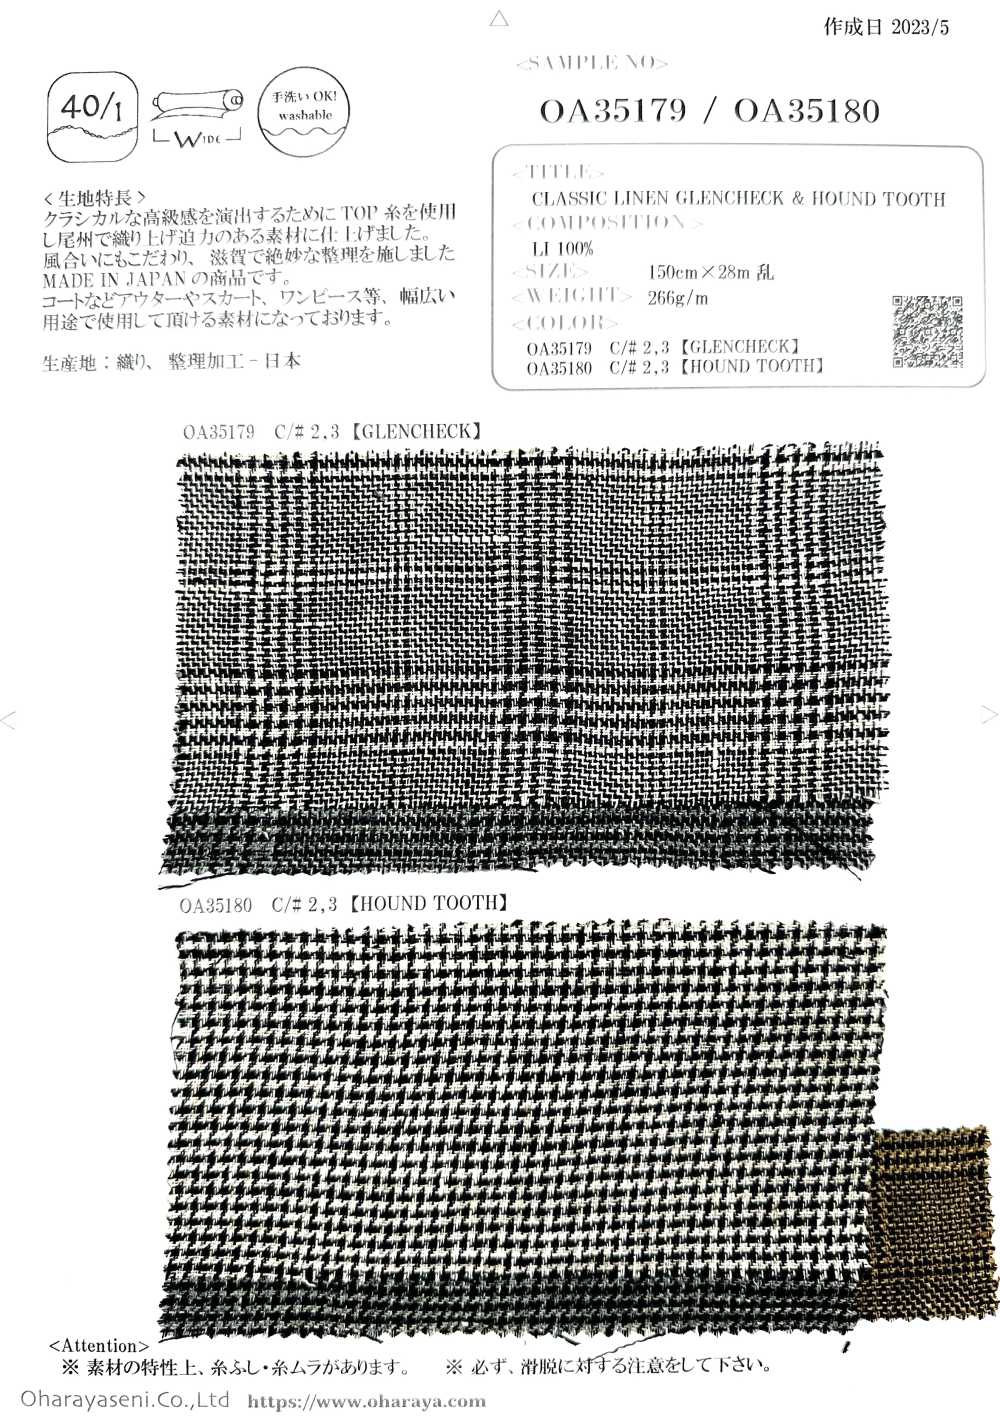 OA35179 CLASSIC LINEN GLENCHECK & HOUND TOOTH[Textile / Fabric] Oharayaseni